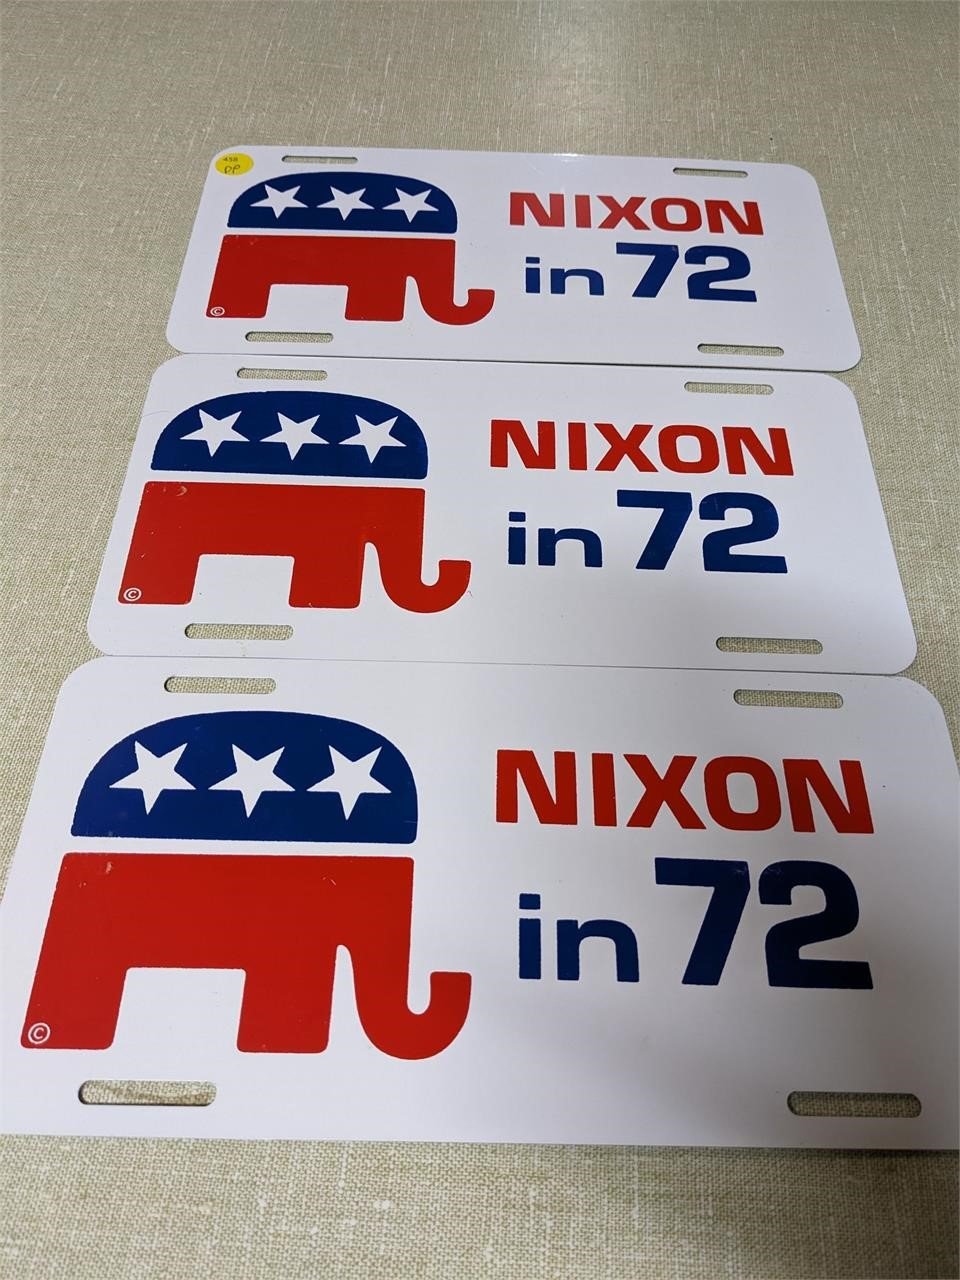 3 Nixon in 72 Plates